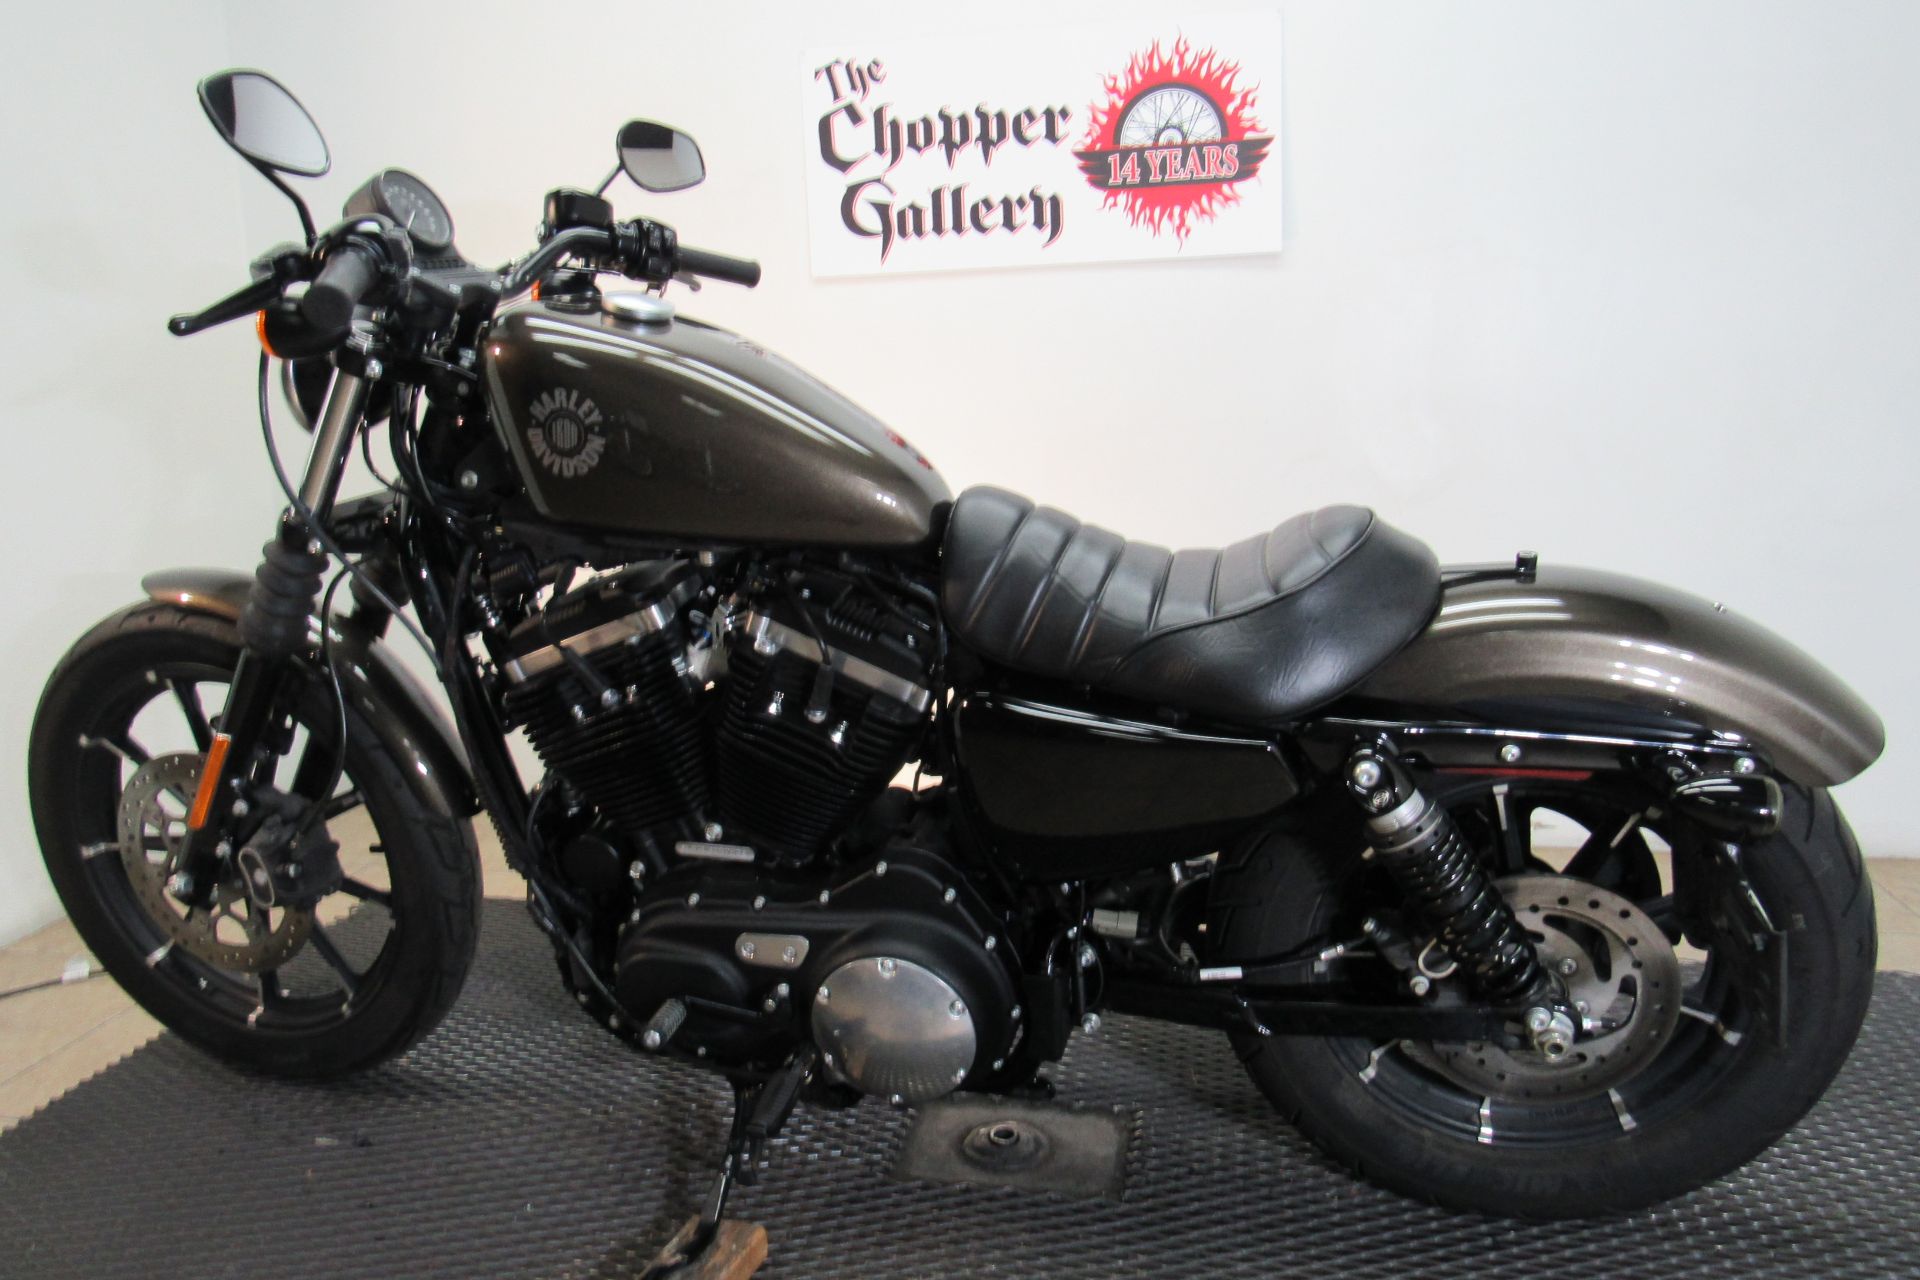 2020 Harley-Davidson Iron 883™ in Temecula, California - Photo 6